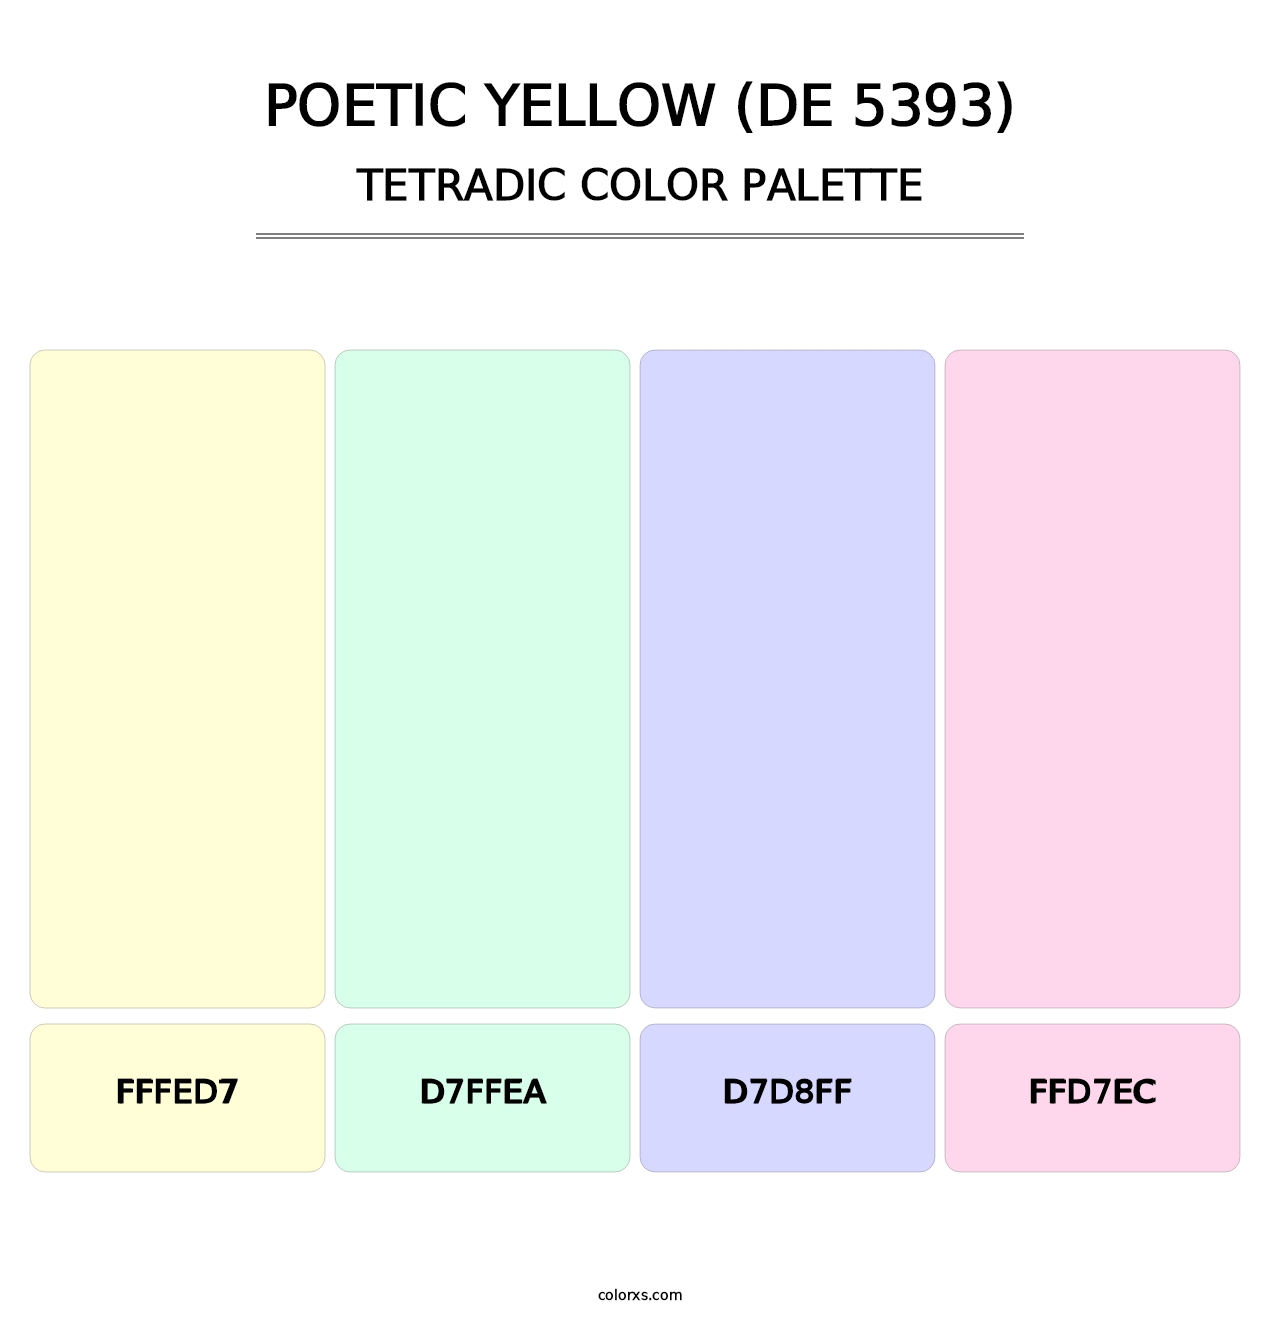 Poetic Yellow (DE 5393) - Tetradic Color Palette